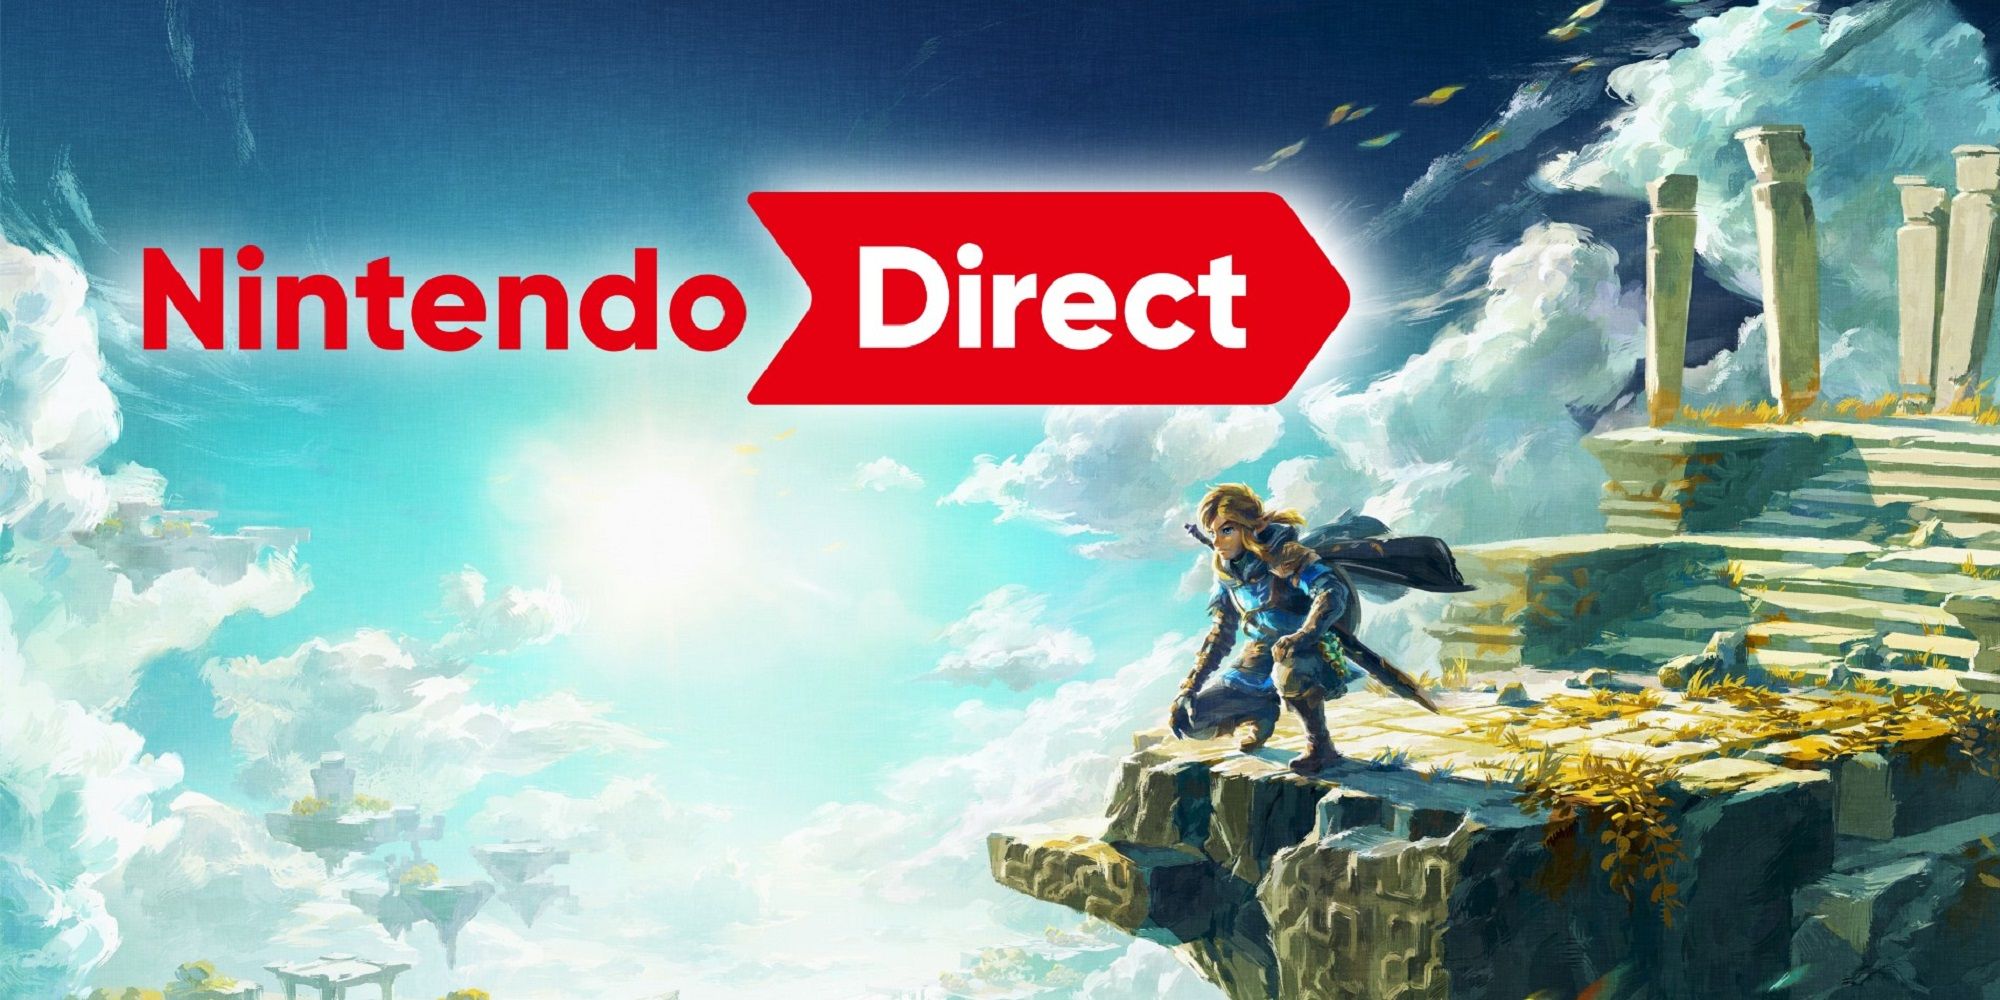 Nintendo Direct Announced For February 8